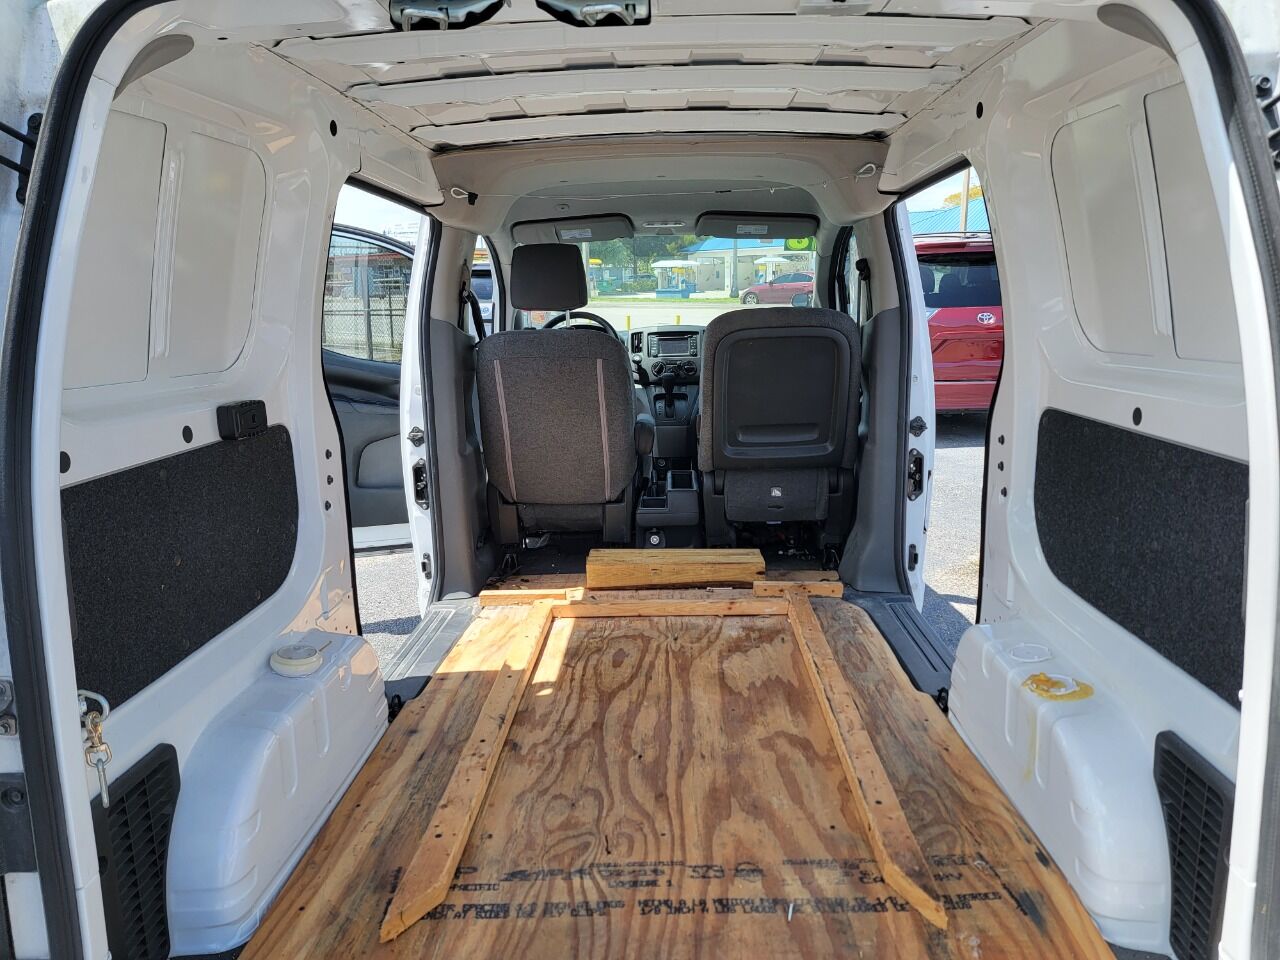 2018 NISSAN NV200 Van - $17,999